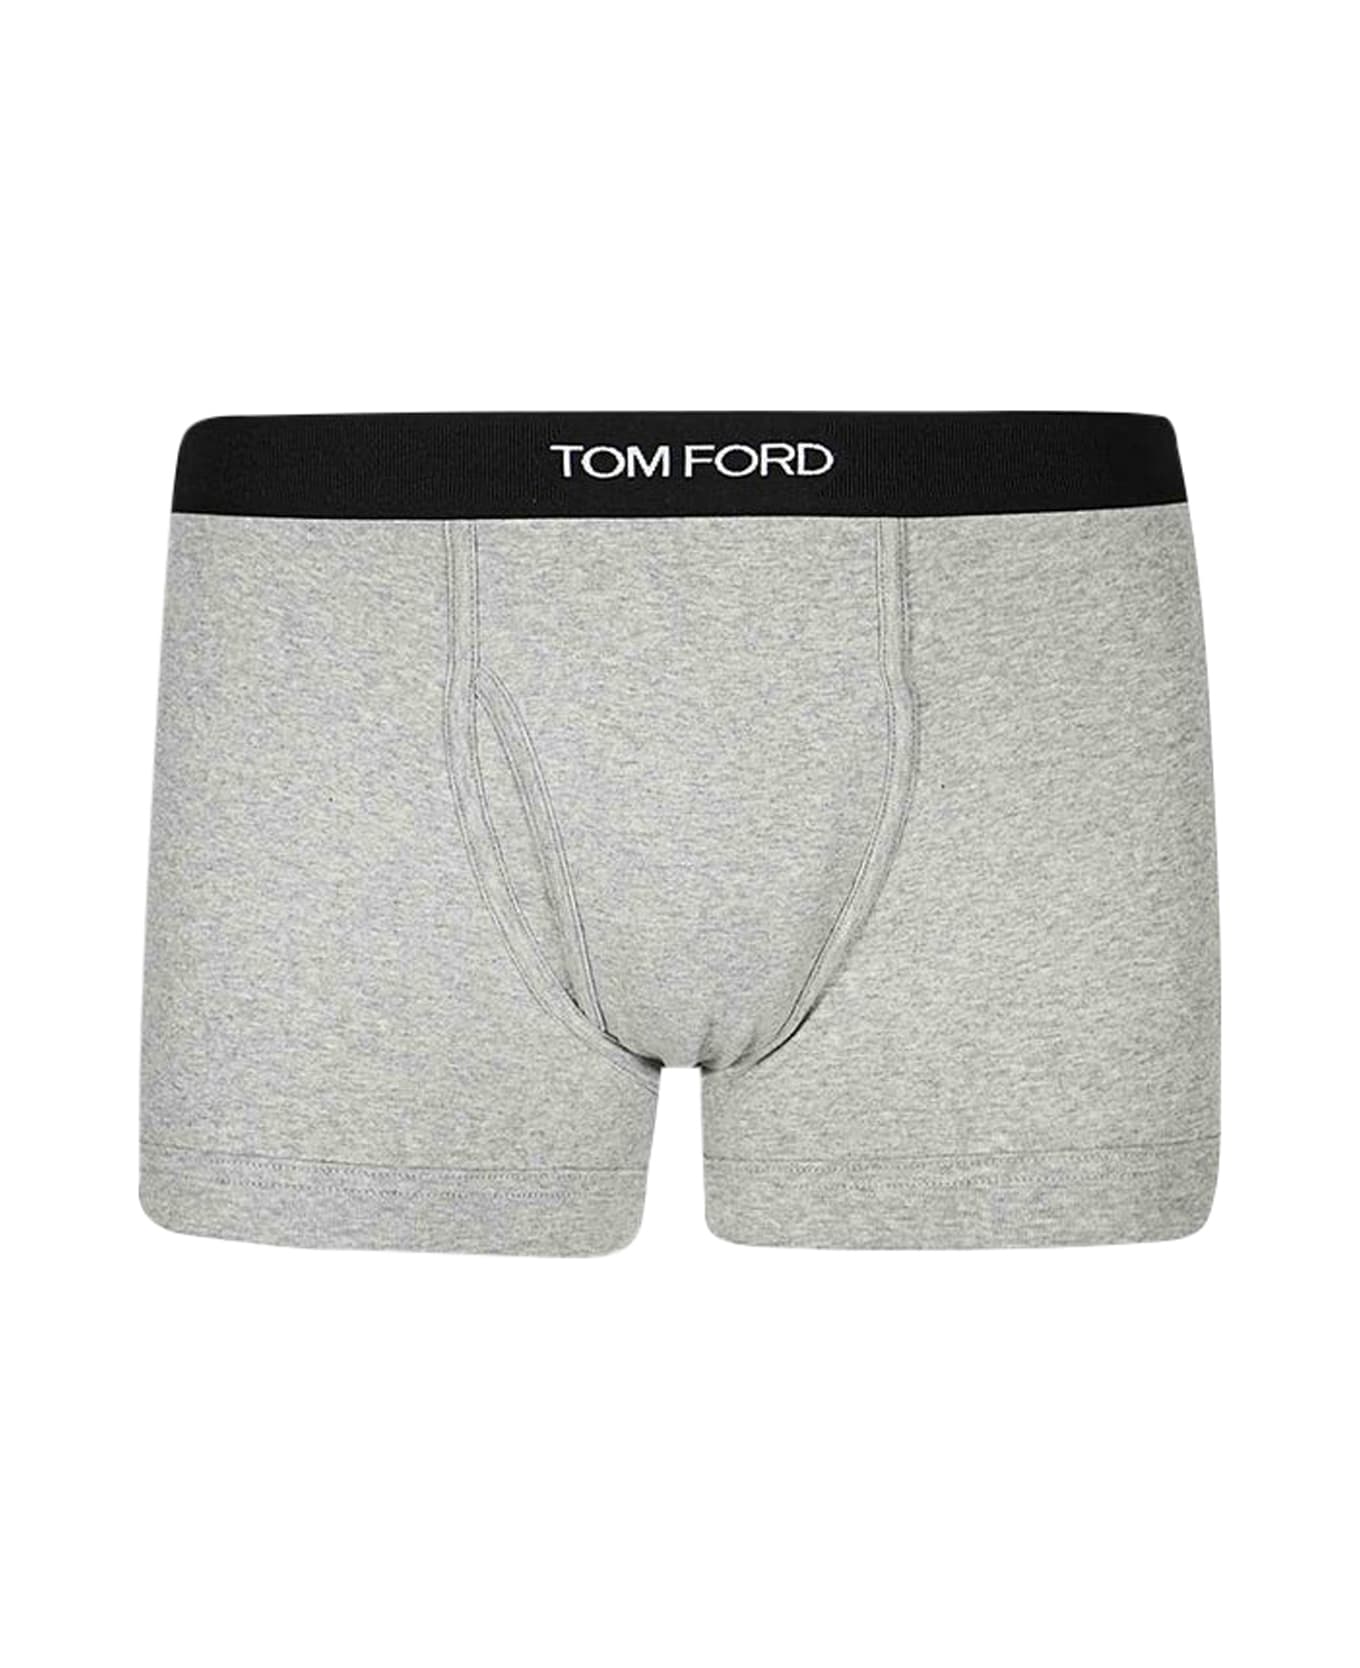 Tom Ford Bi-pack Cotton Stretch Jersey Brief - Black Grey